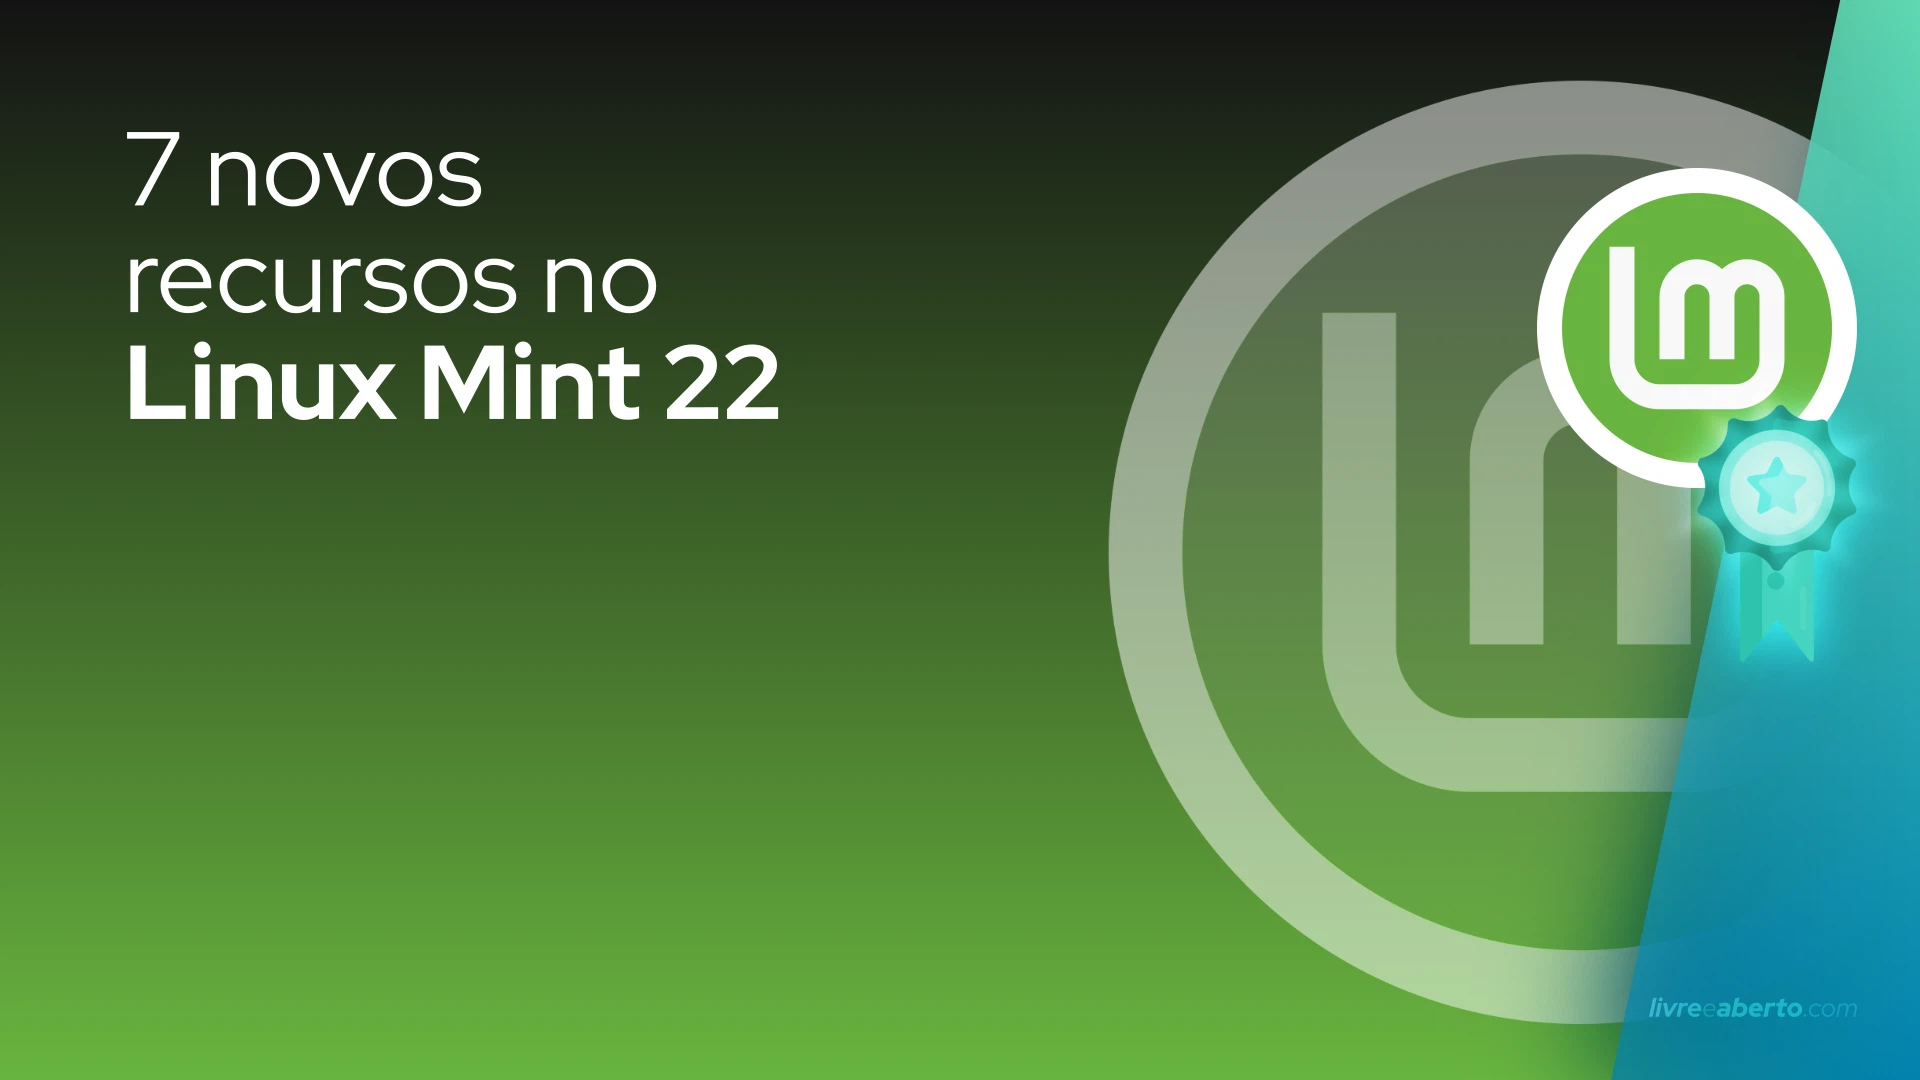 7 novos recursos no Linux Mint 22